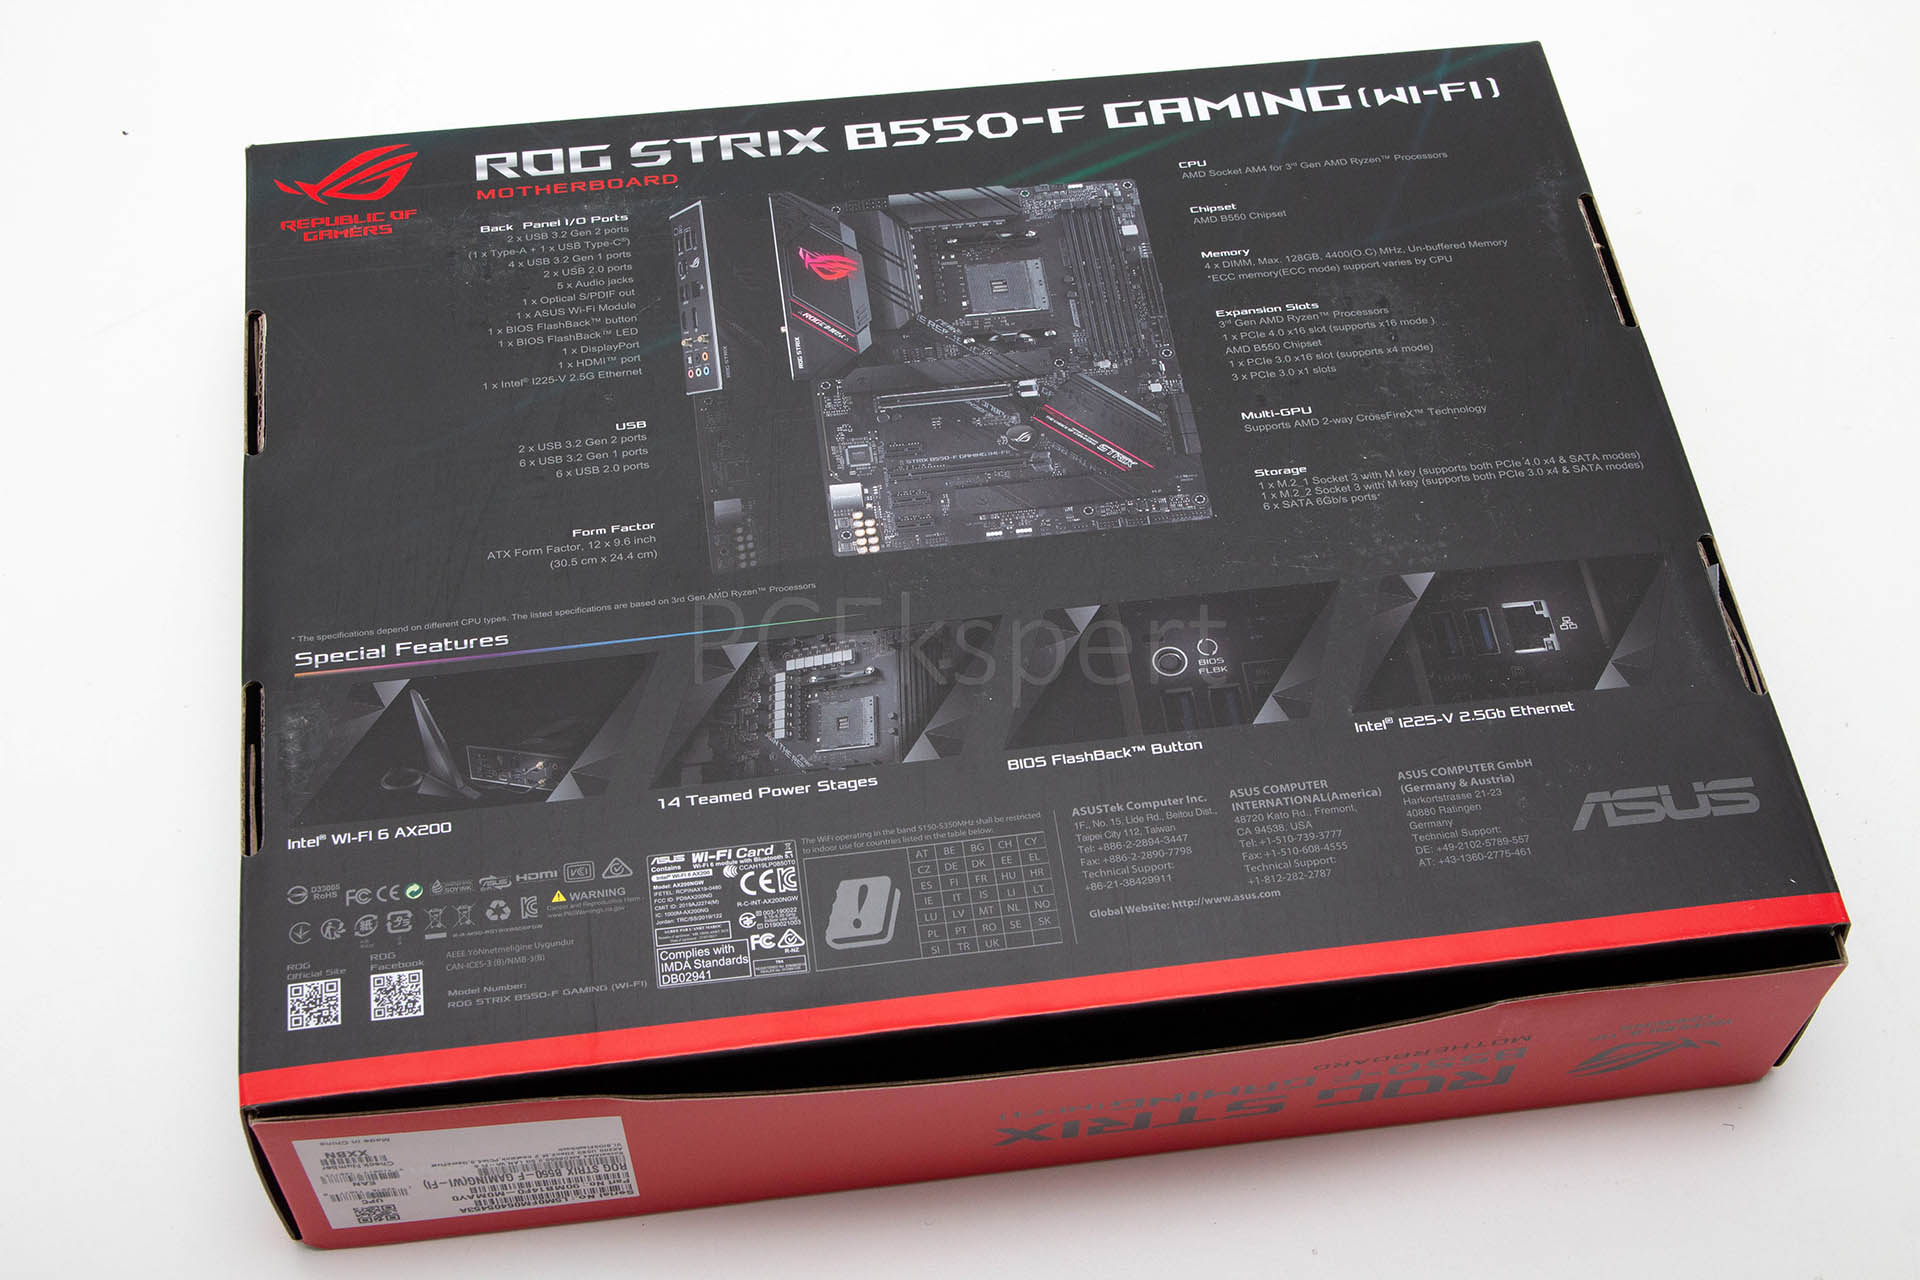 PC Ekspert - Hardware EZine - ASUS ROG STRIX B550-F GAMING (WI-FI) vs